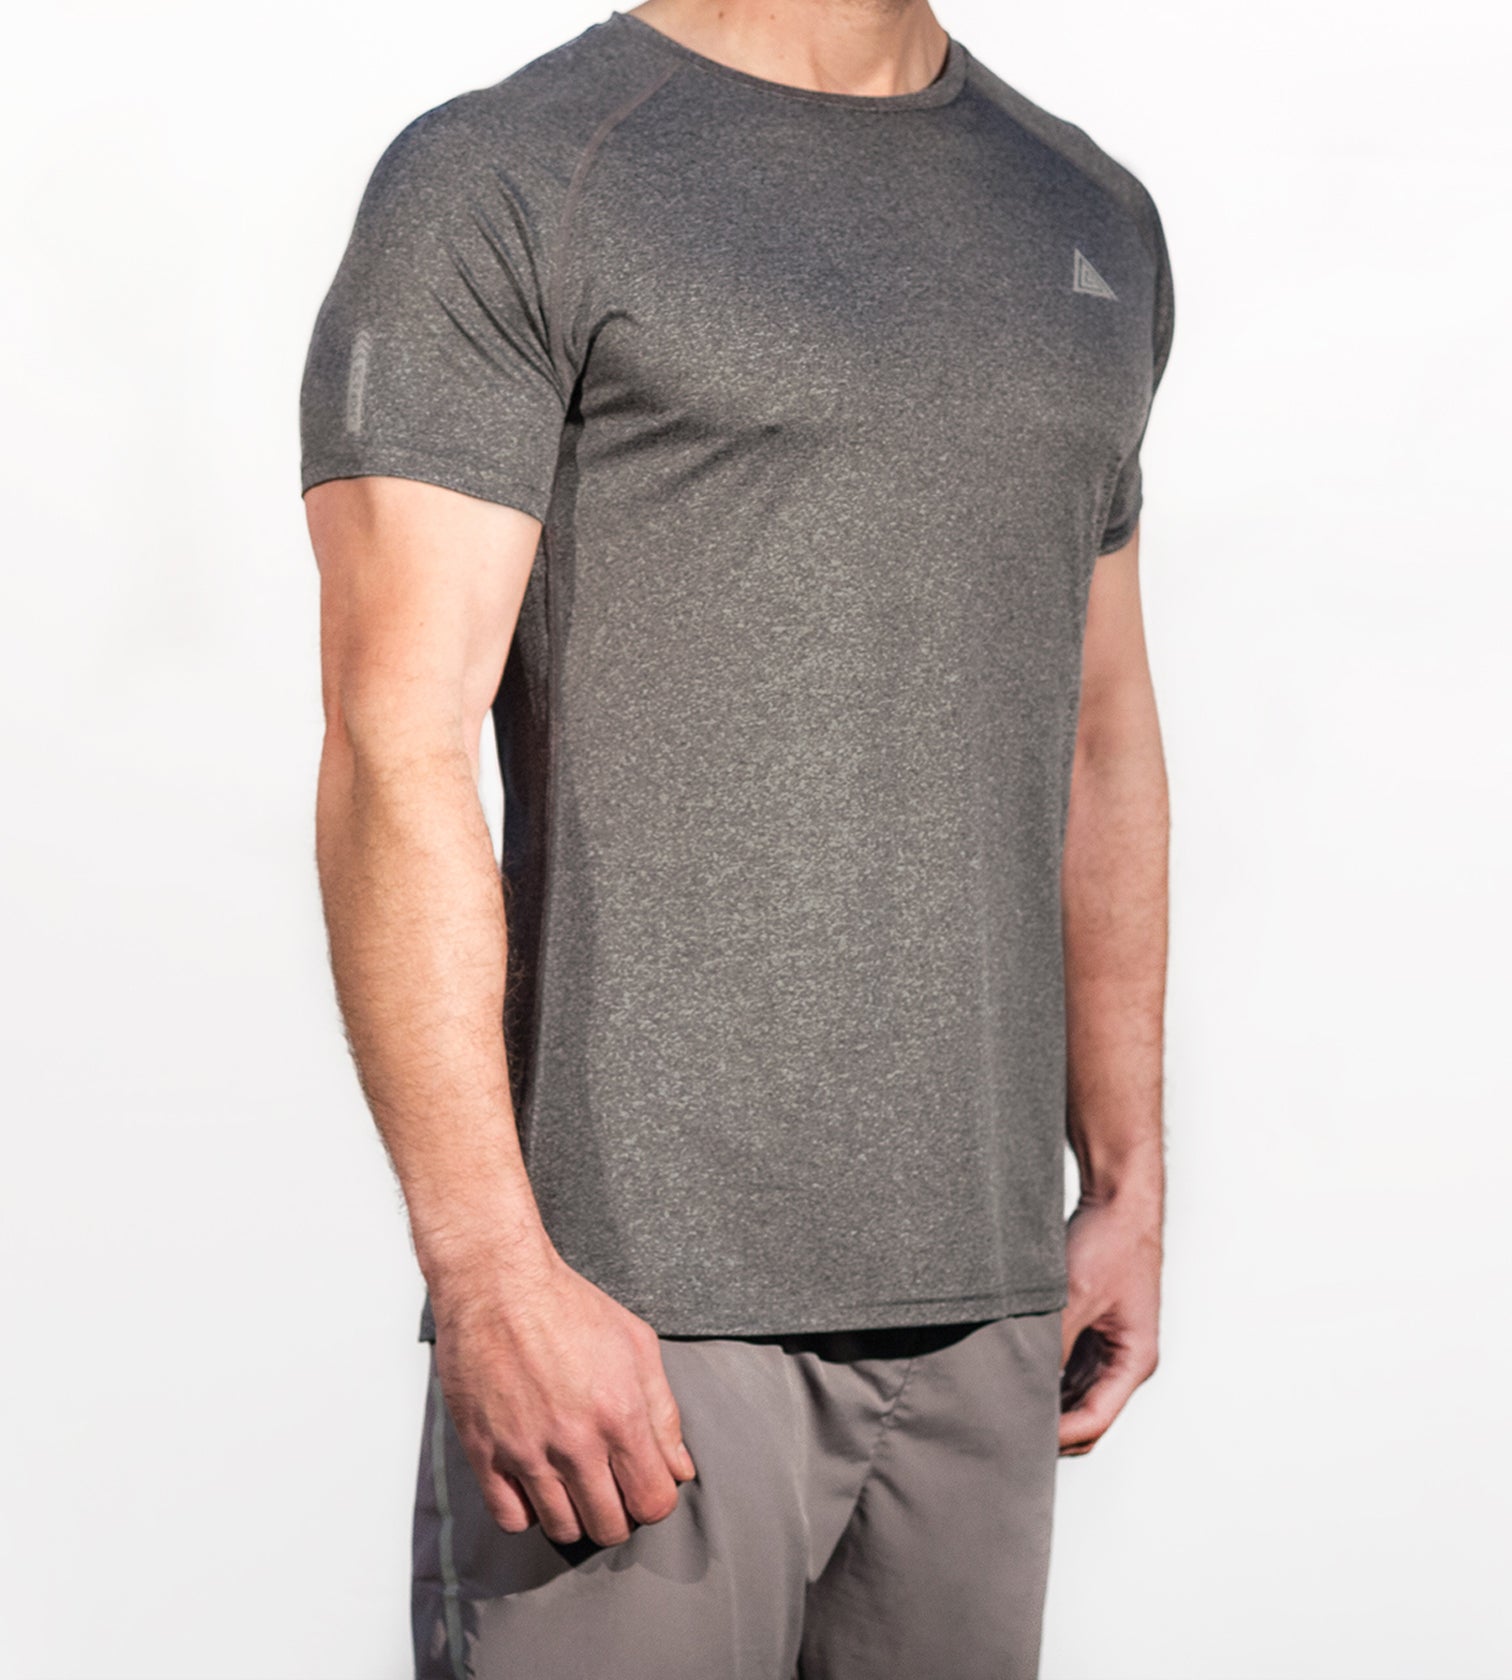 Pertenecer a Señal Oxidar Camisetas tecnicas para running, trail running, trekking, gym - Aran –  Upgrade Wear